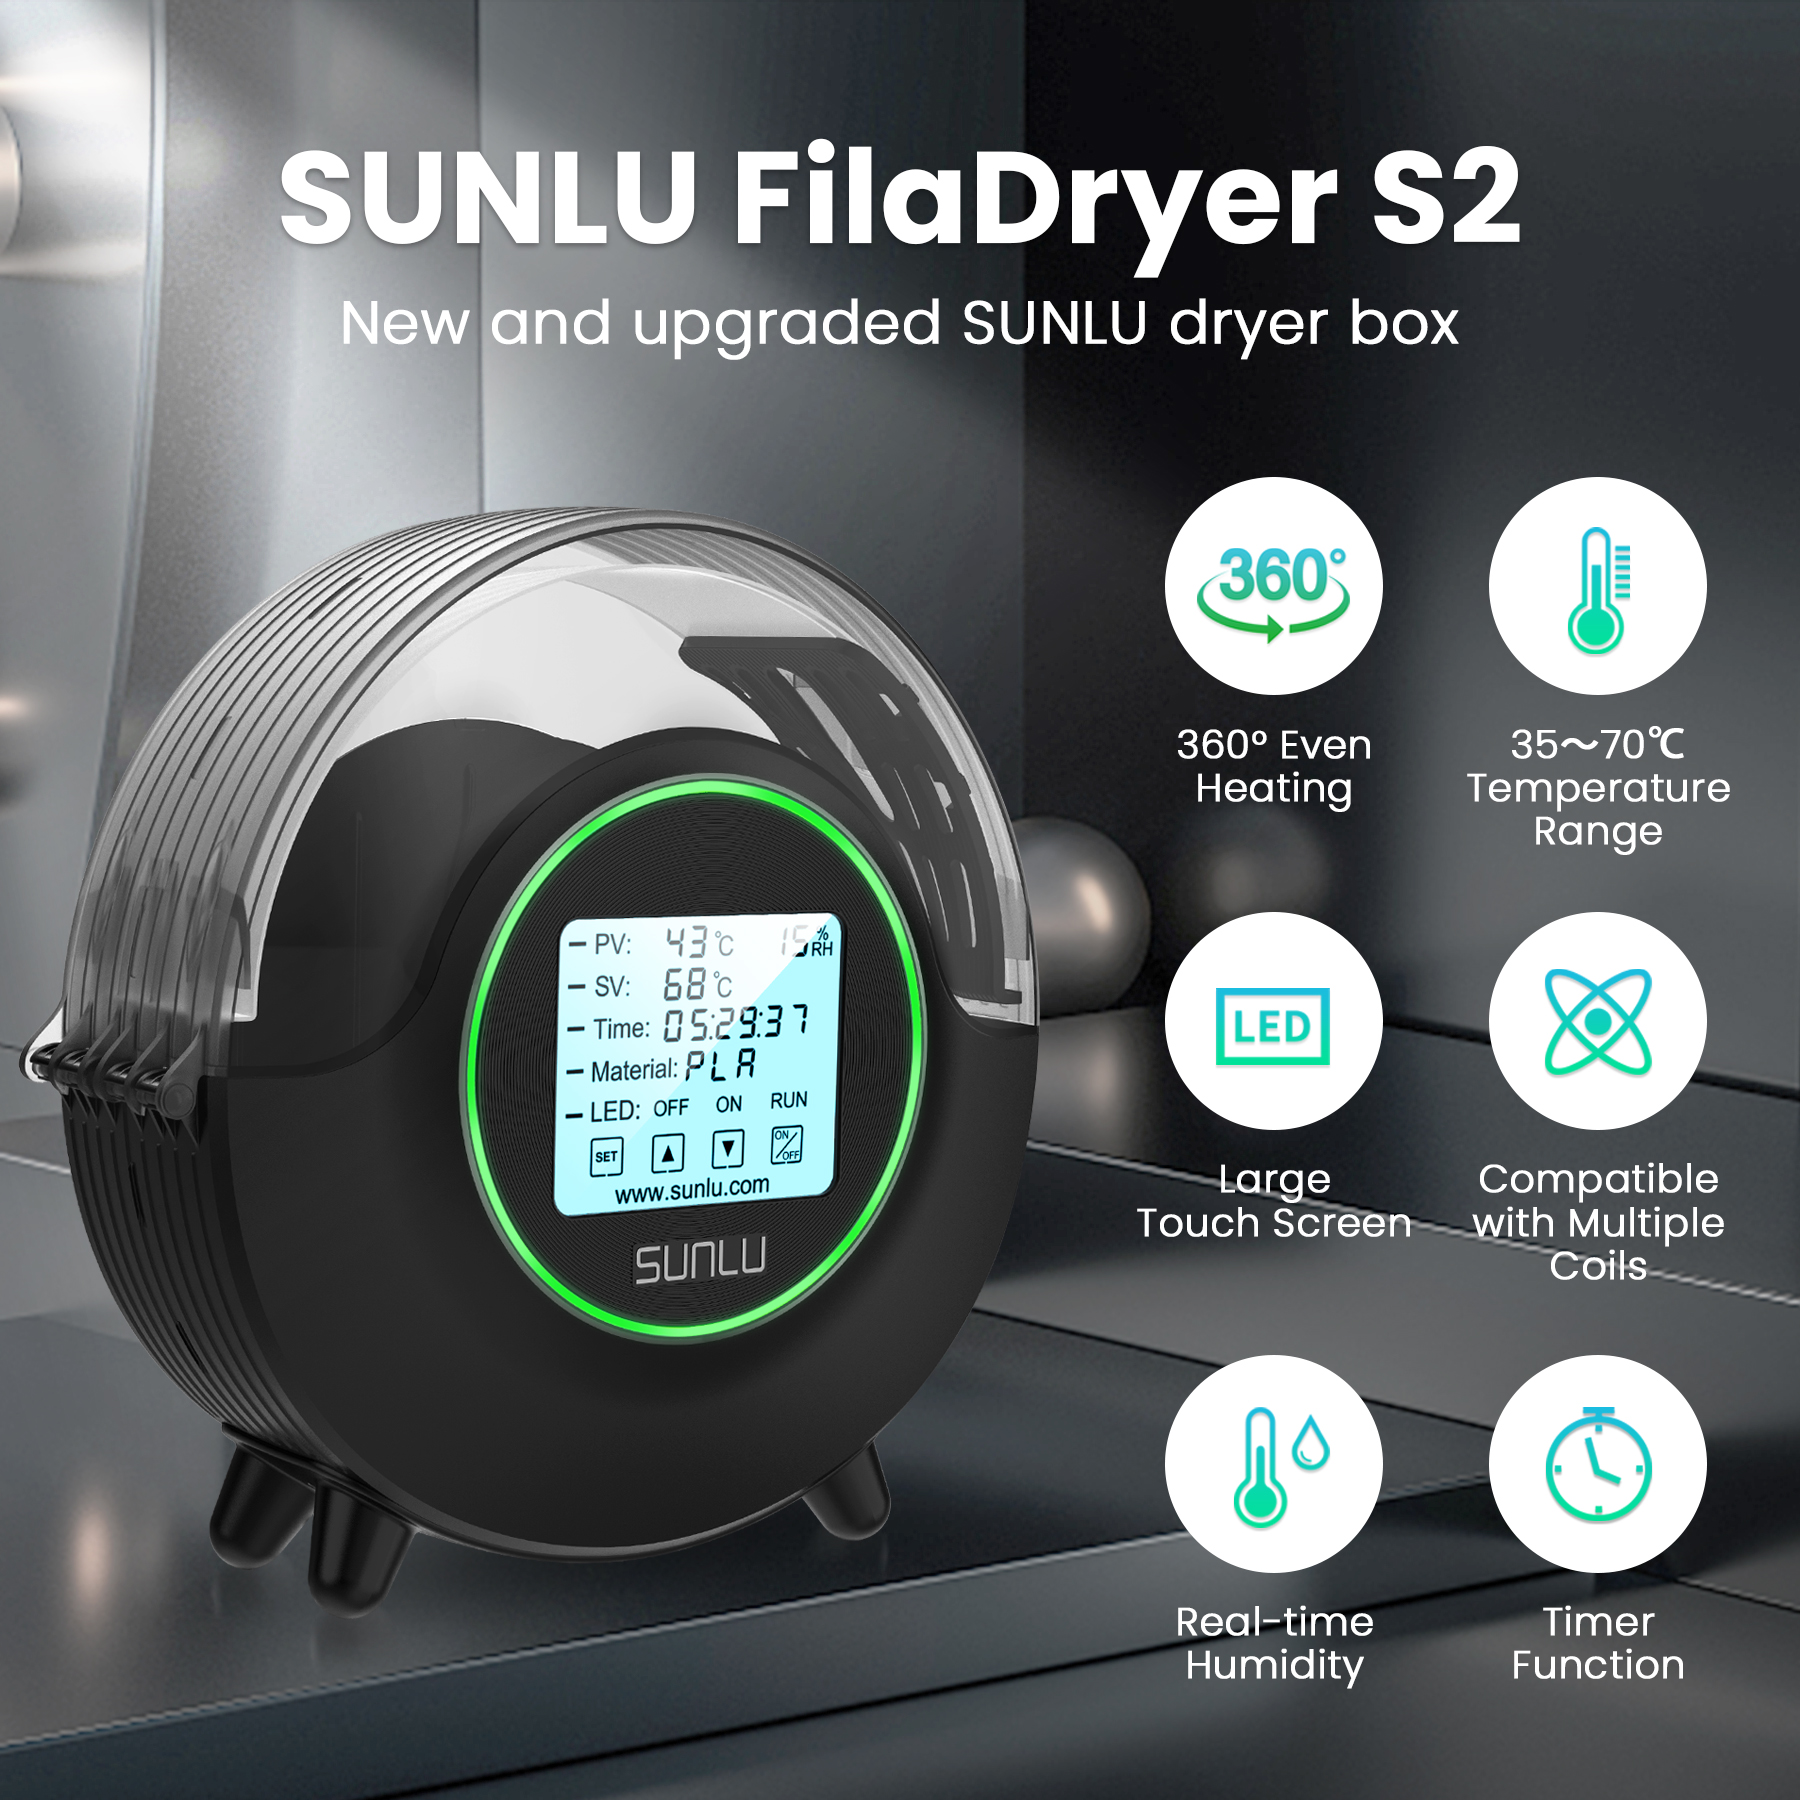 Is The SUNLU FilaDryer S2 Worth It? 